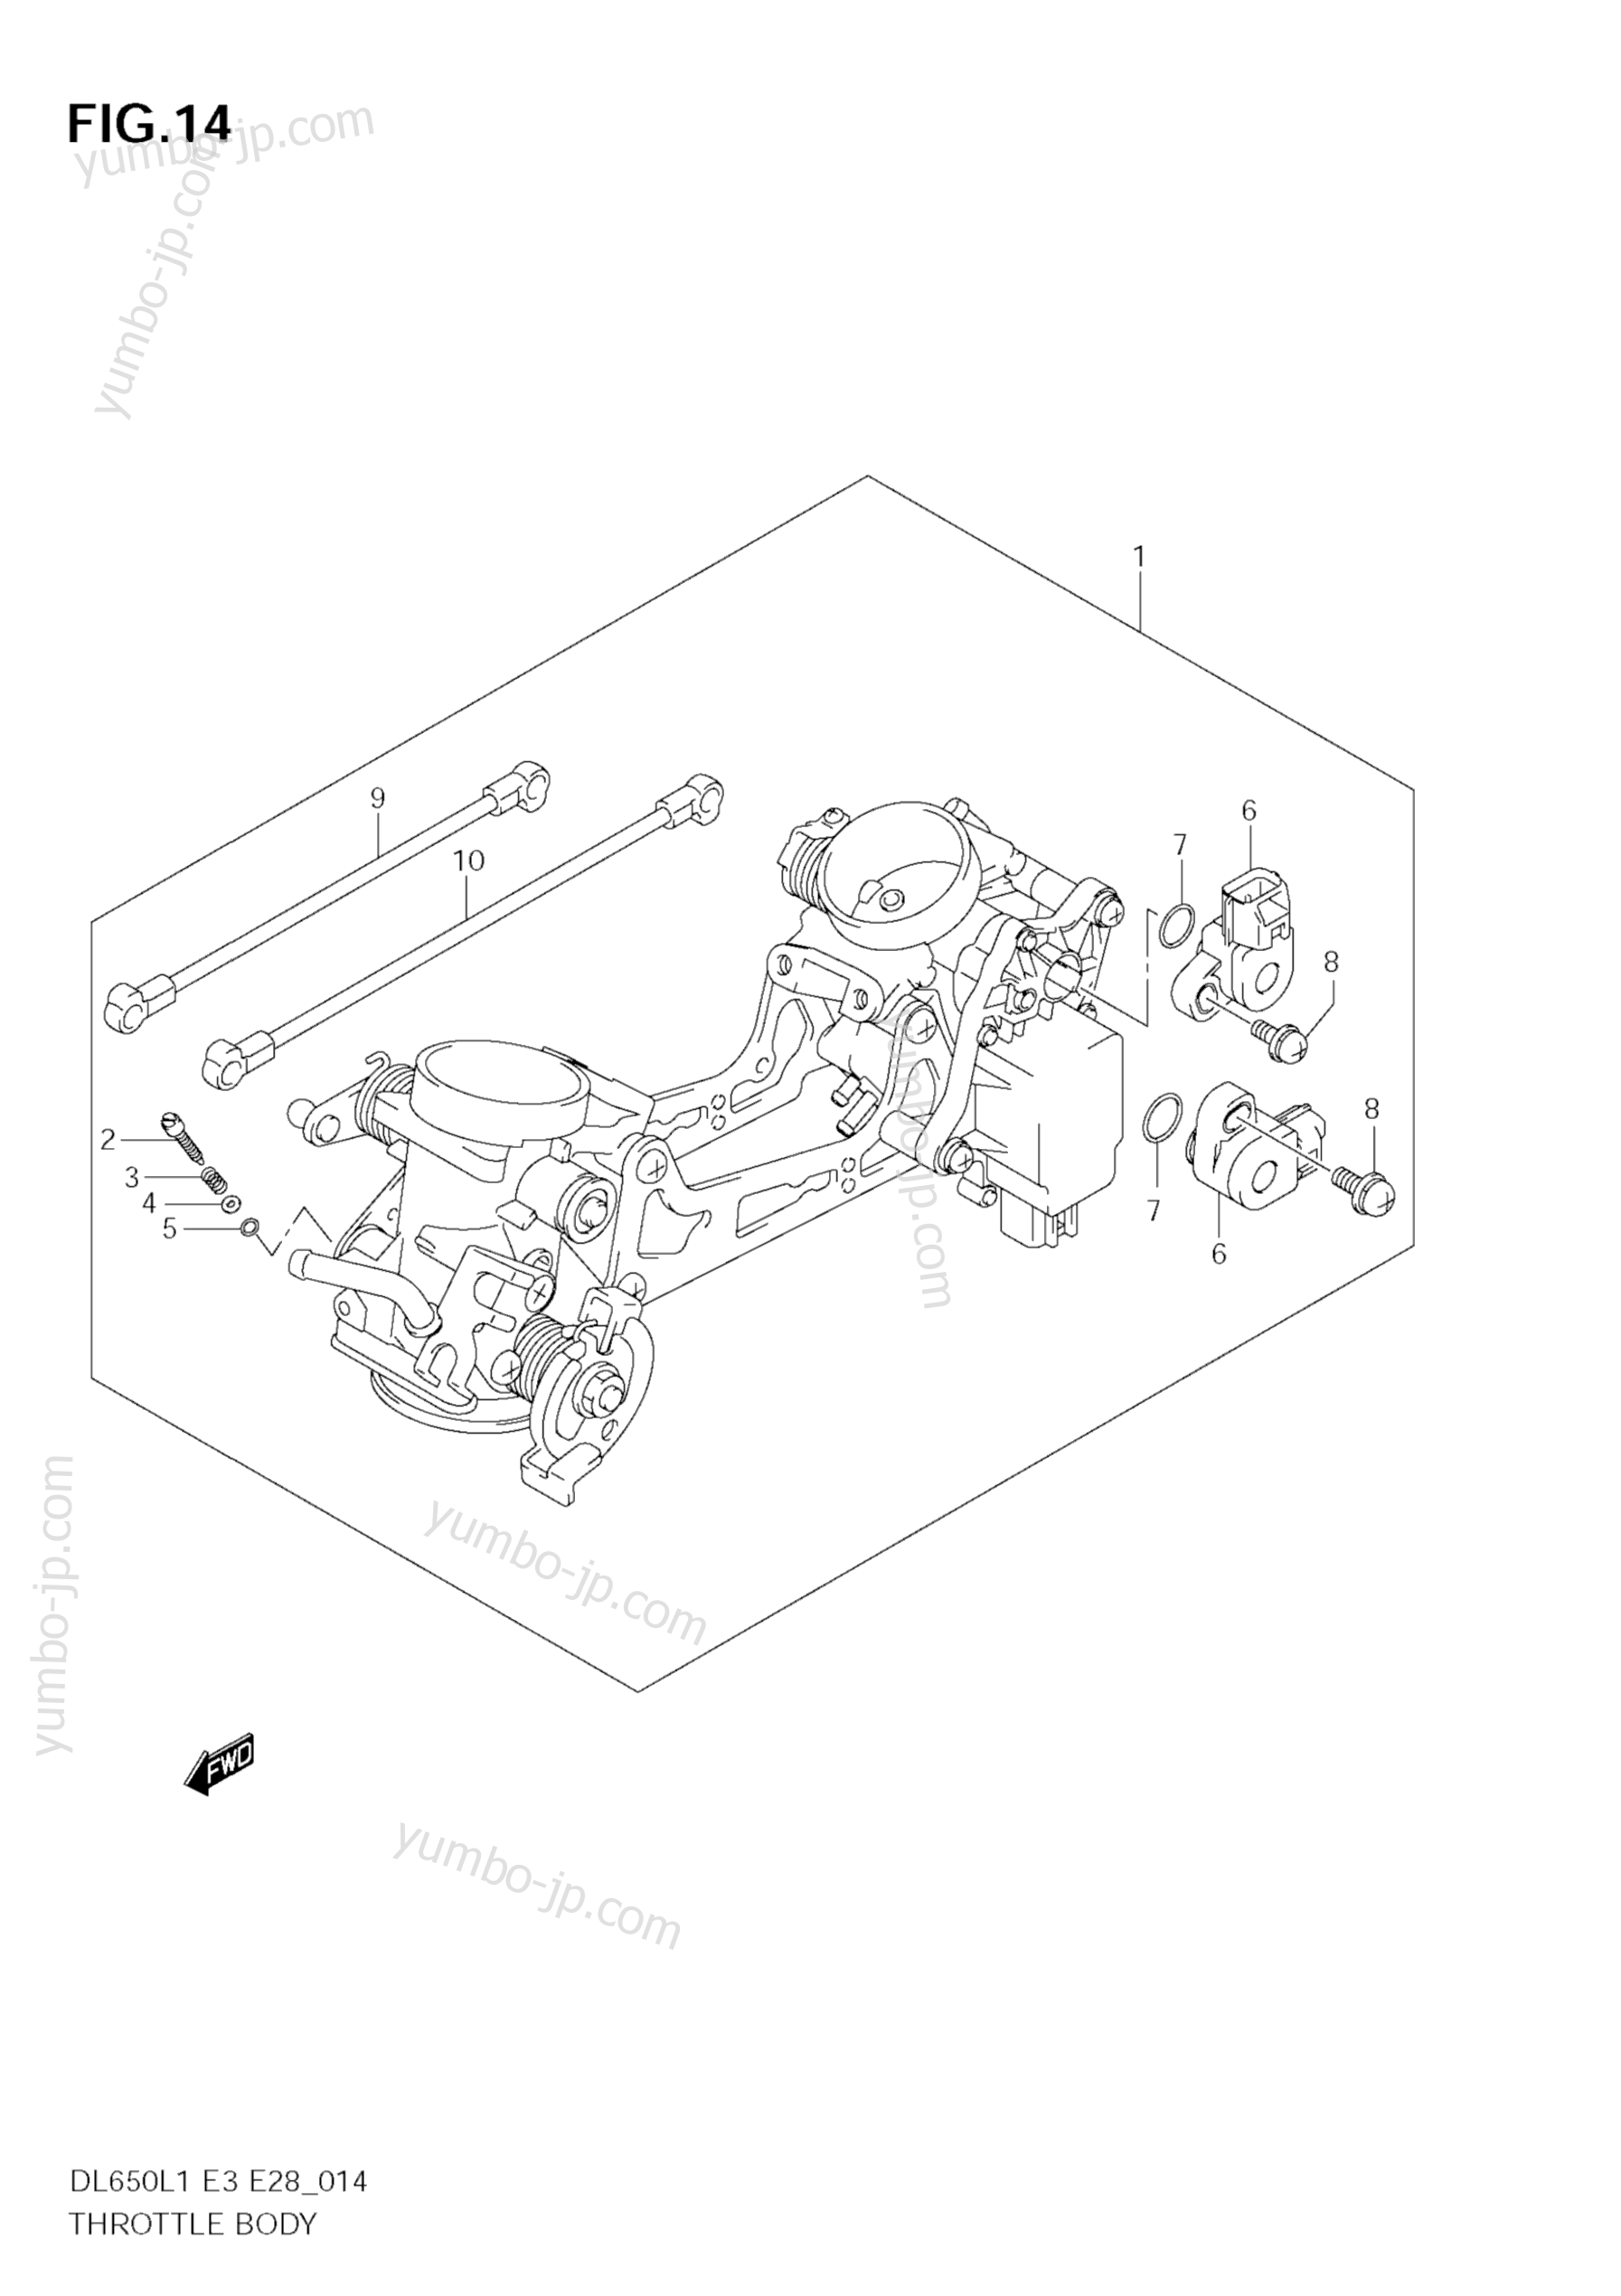 THROTTLE BODY (DL650A L1 E3) for motorcycles SUZUKI V-Strom (DL650A) 2011 year